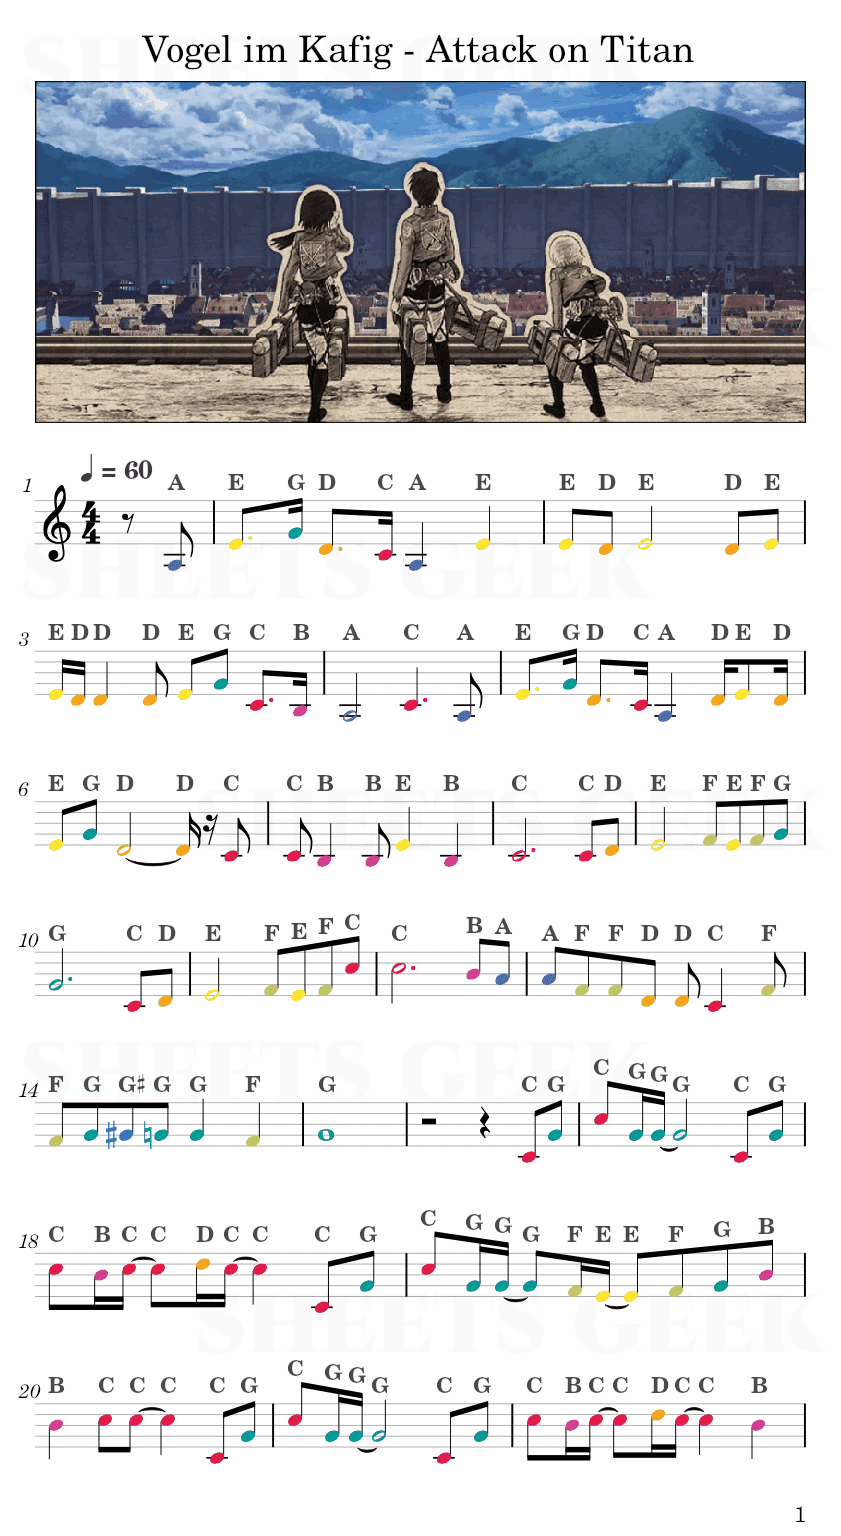 Vogel im Kafig - Shingeki no Kyojin (Attack on Titan) Easy Sheet Music Free for piano, keyboard, flute, violin, sax, cello page 1